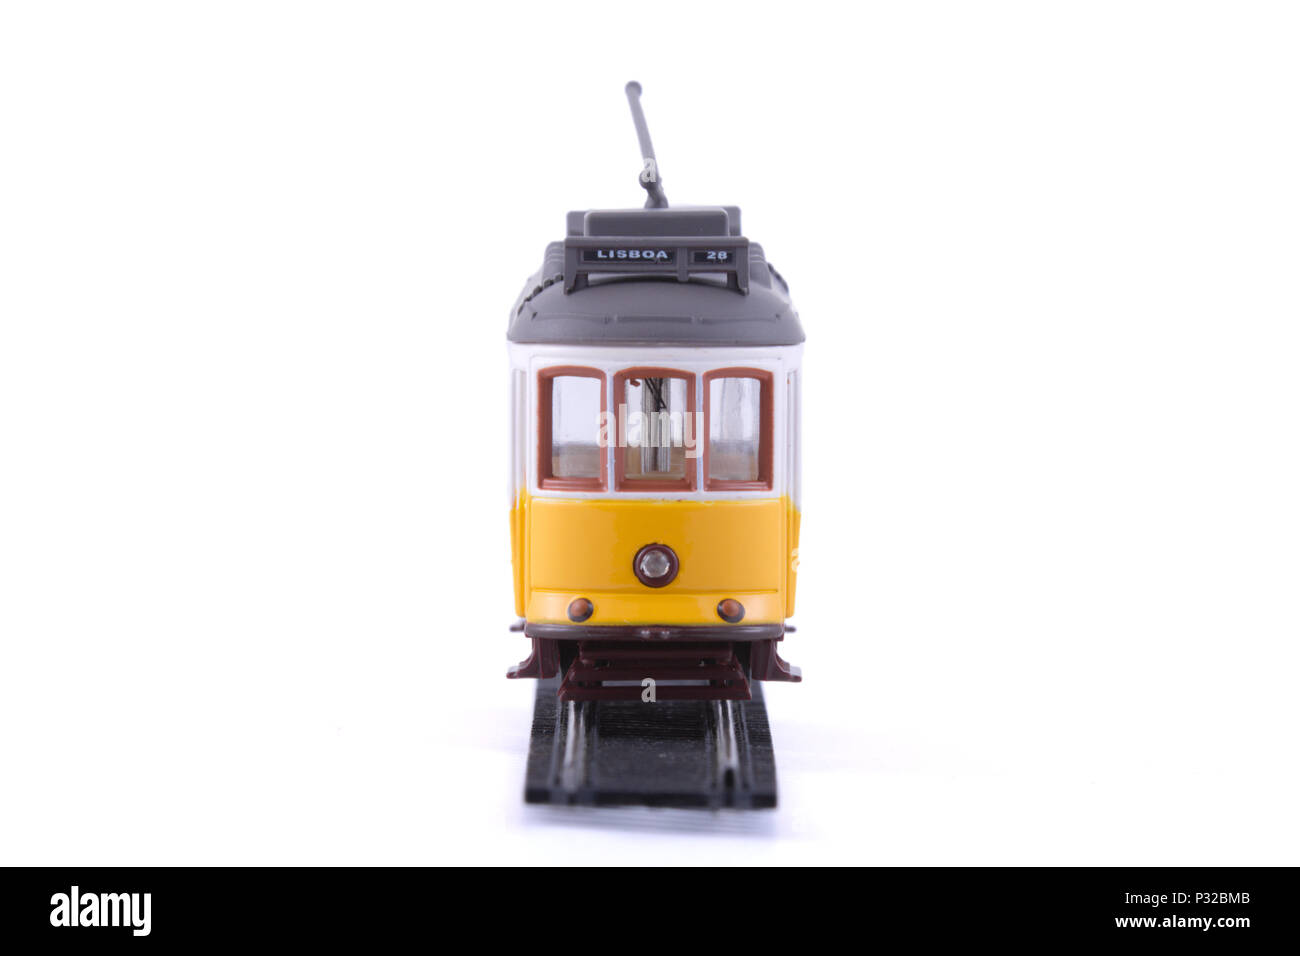 The Lisbon yellow tram. Stock Photo